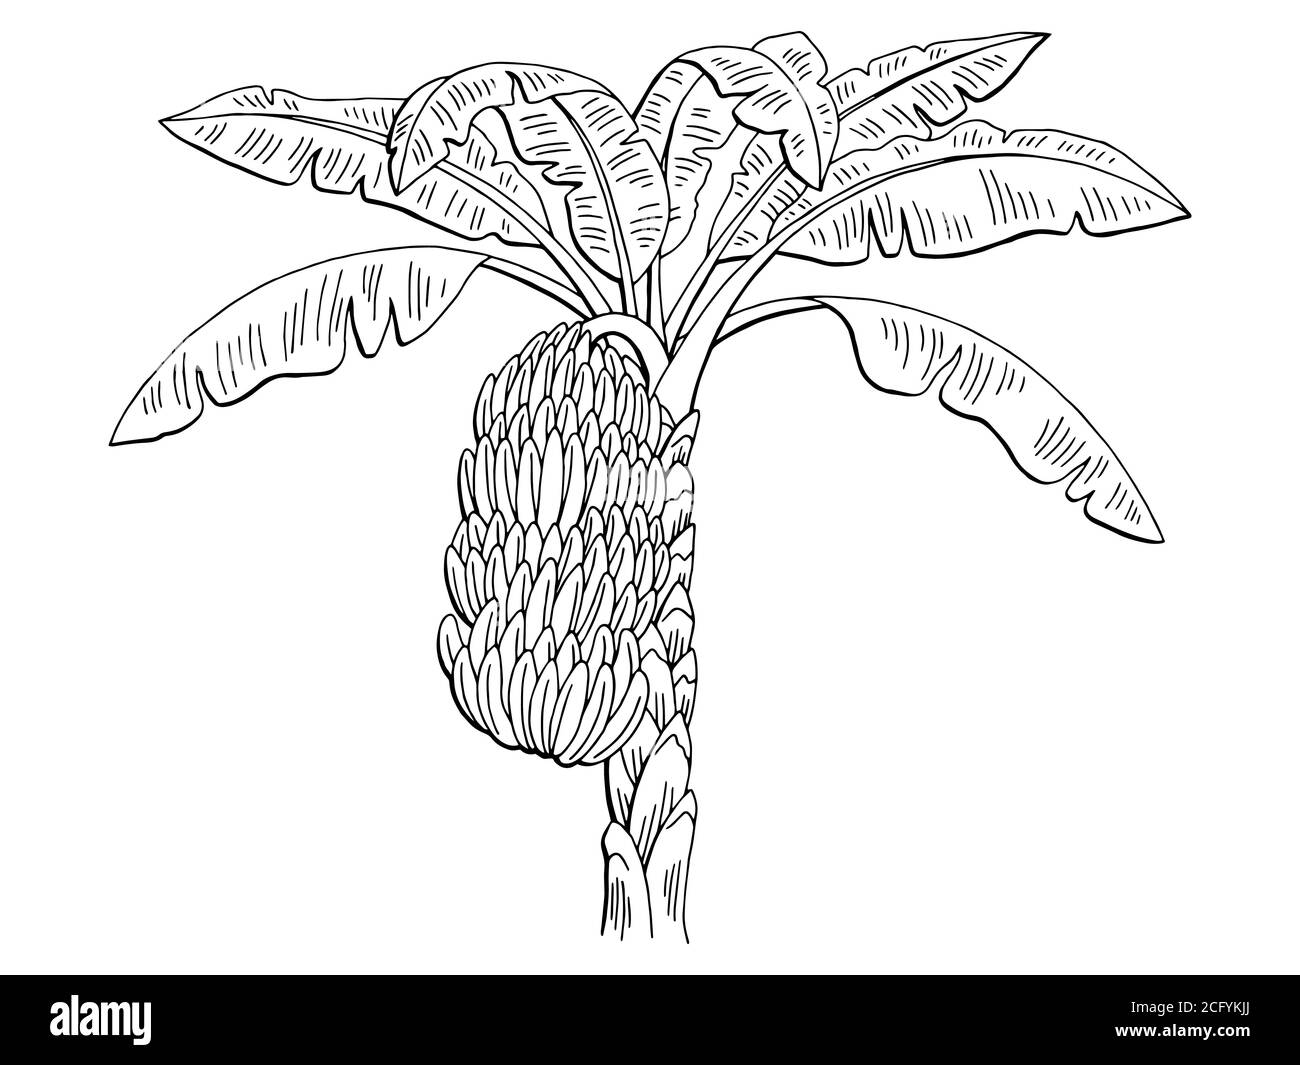 Banana Palm Grafik Zweig schwarz weiß isoliert Skizze Illustration Vektor Stock Vektor